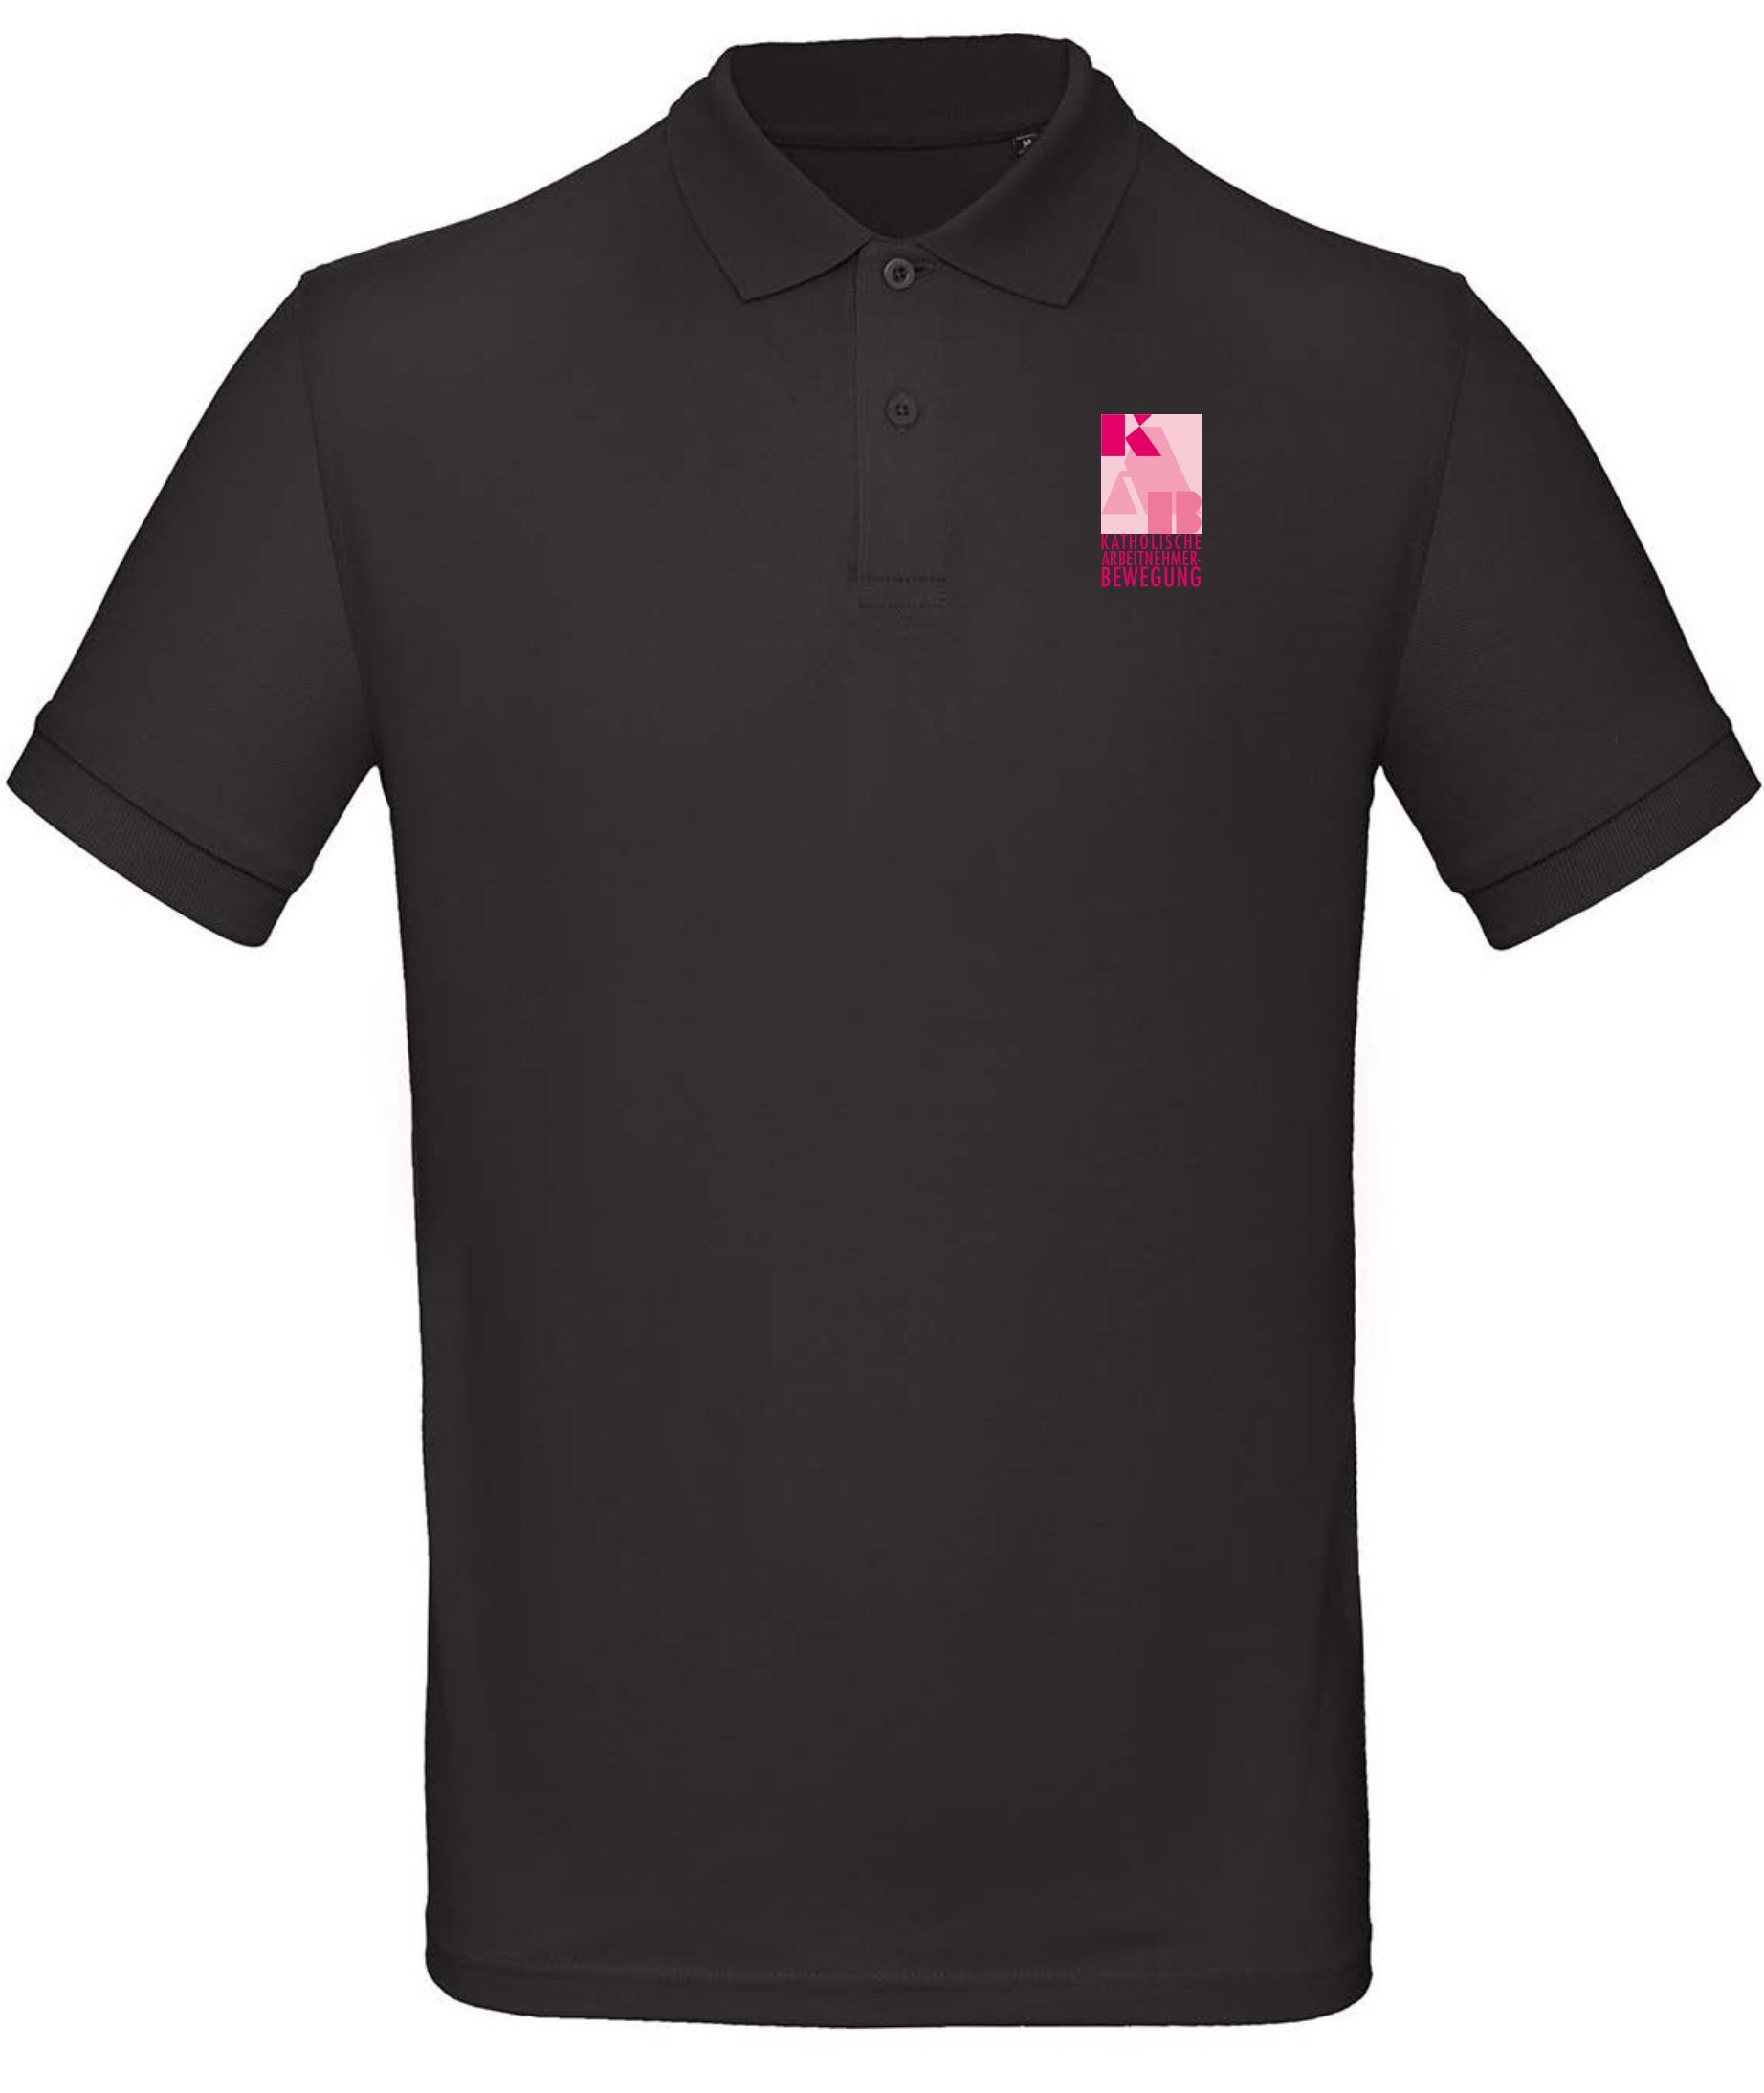 KAB Kampagnen-Kurzarm-Poloshirt schwarz unisex Gr. S